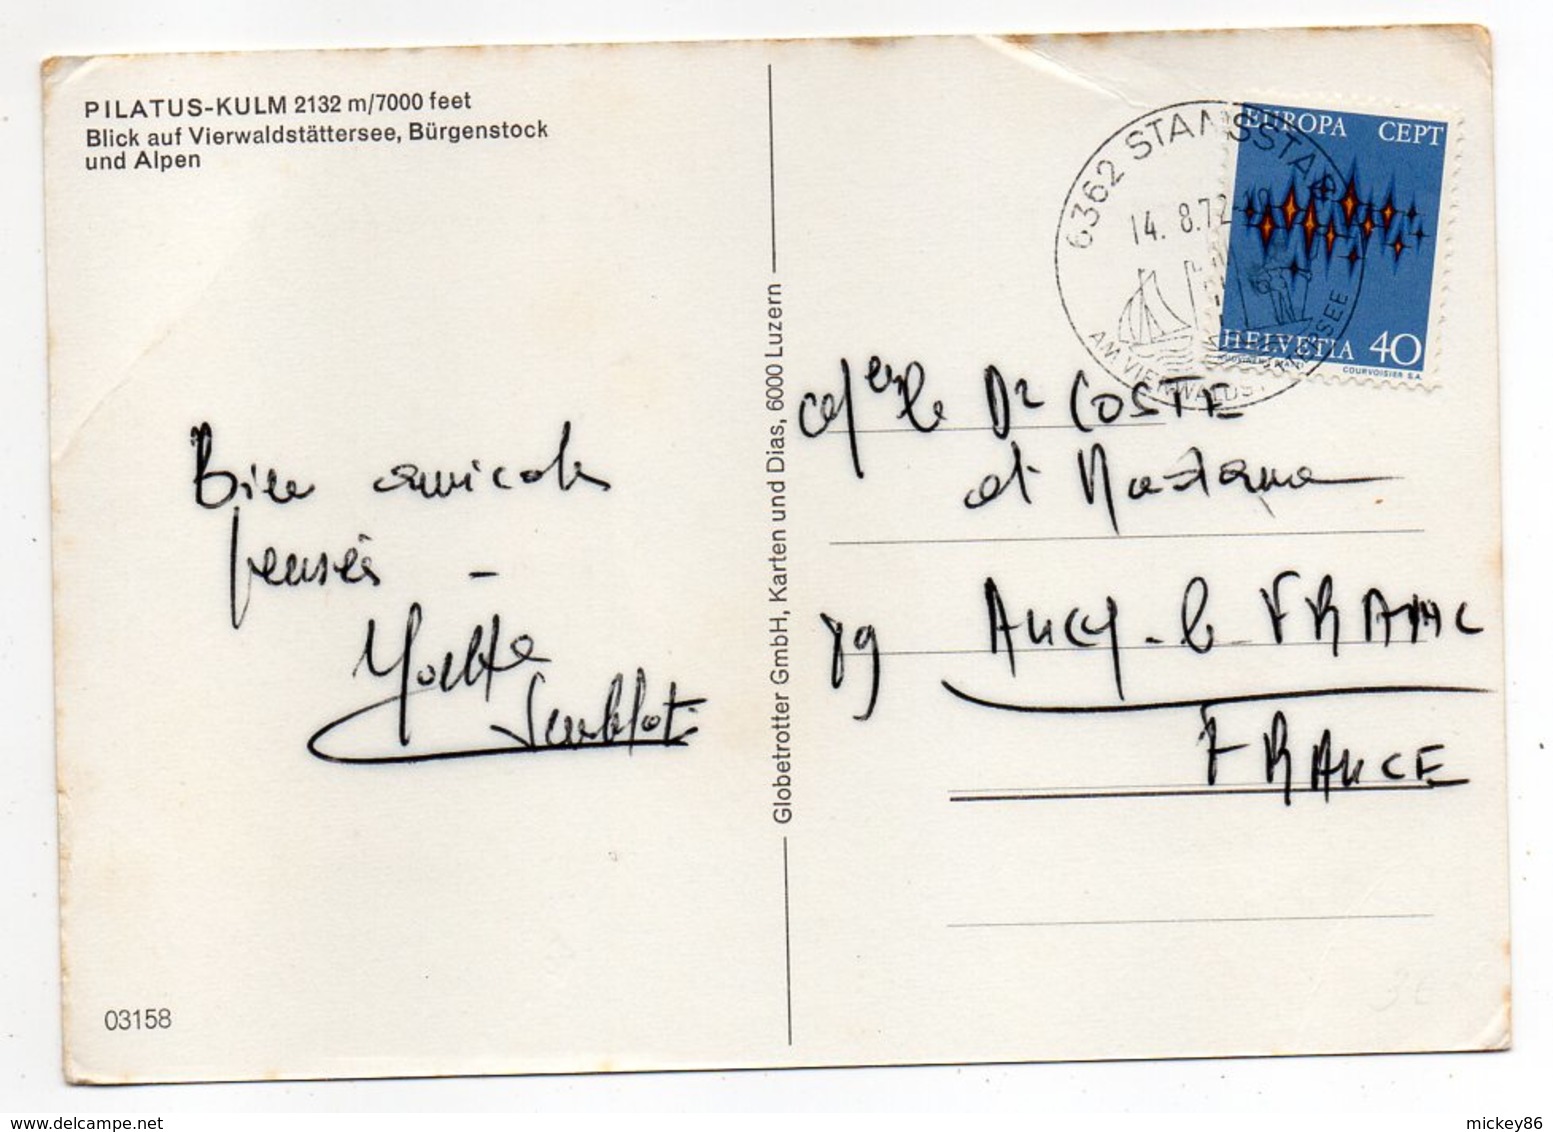 Suisse-LU-KRIENS-1972-PILATUS-KULM 2132m-timbre EUROPA --cachet STANSSTAD - Kriens